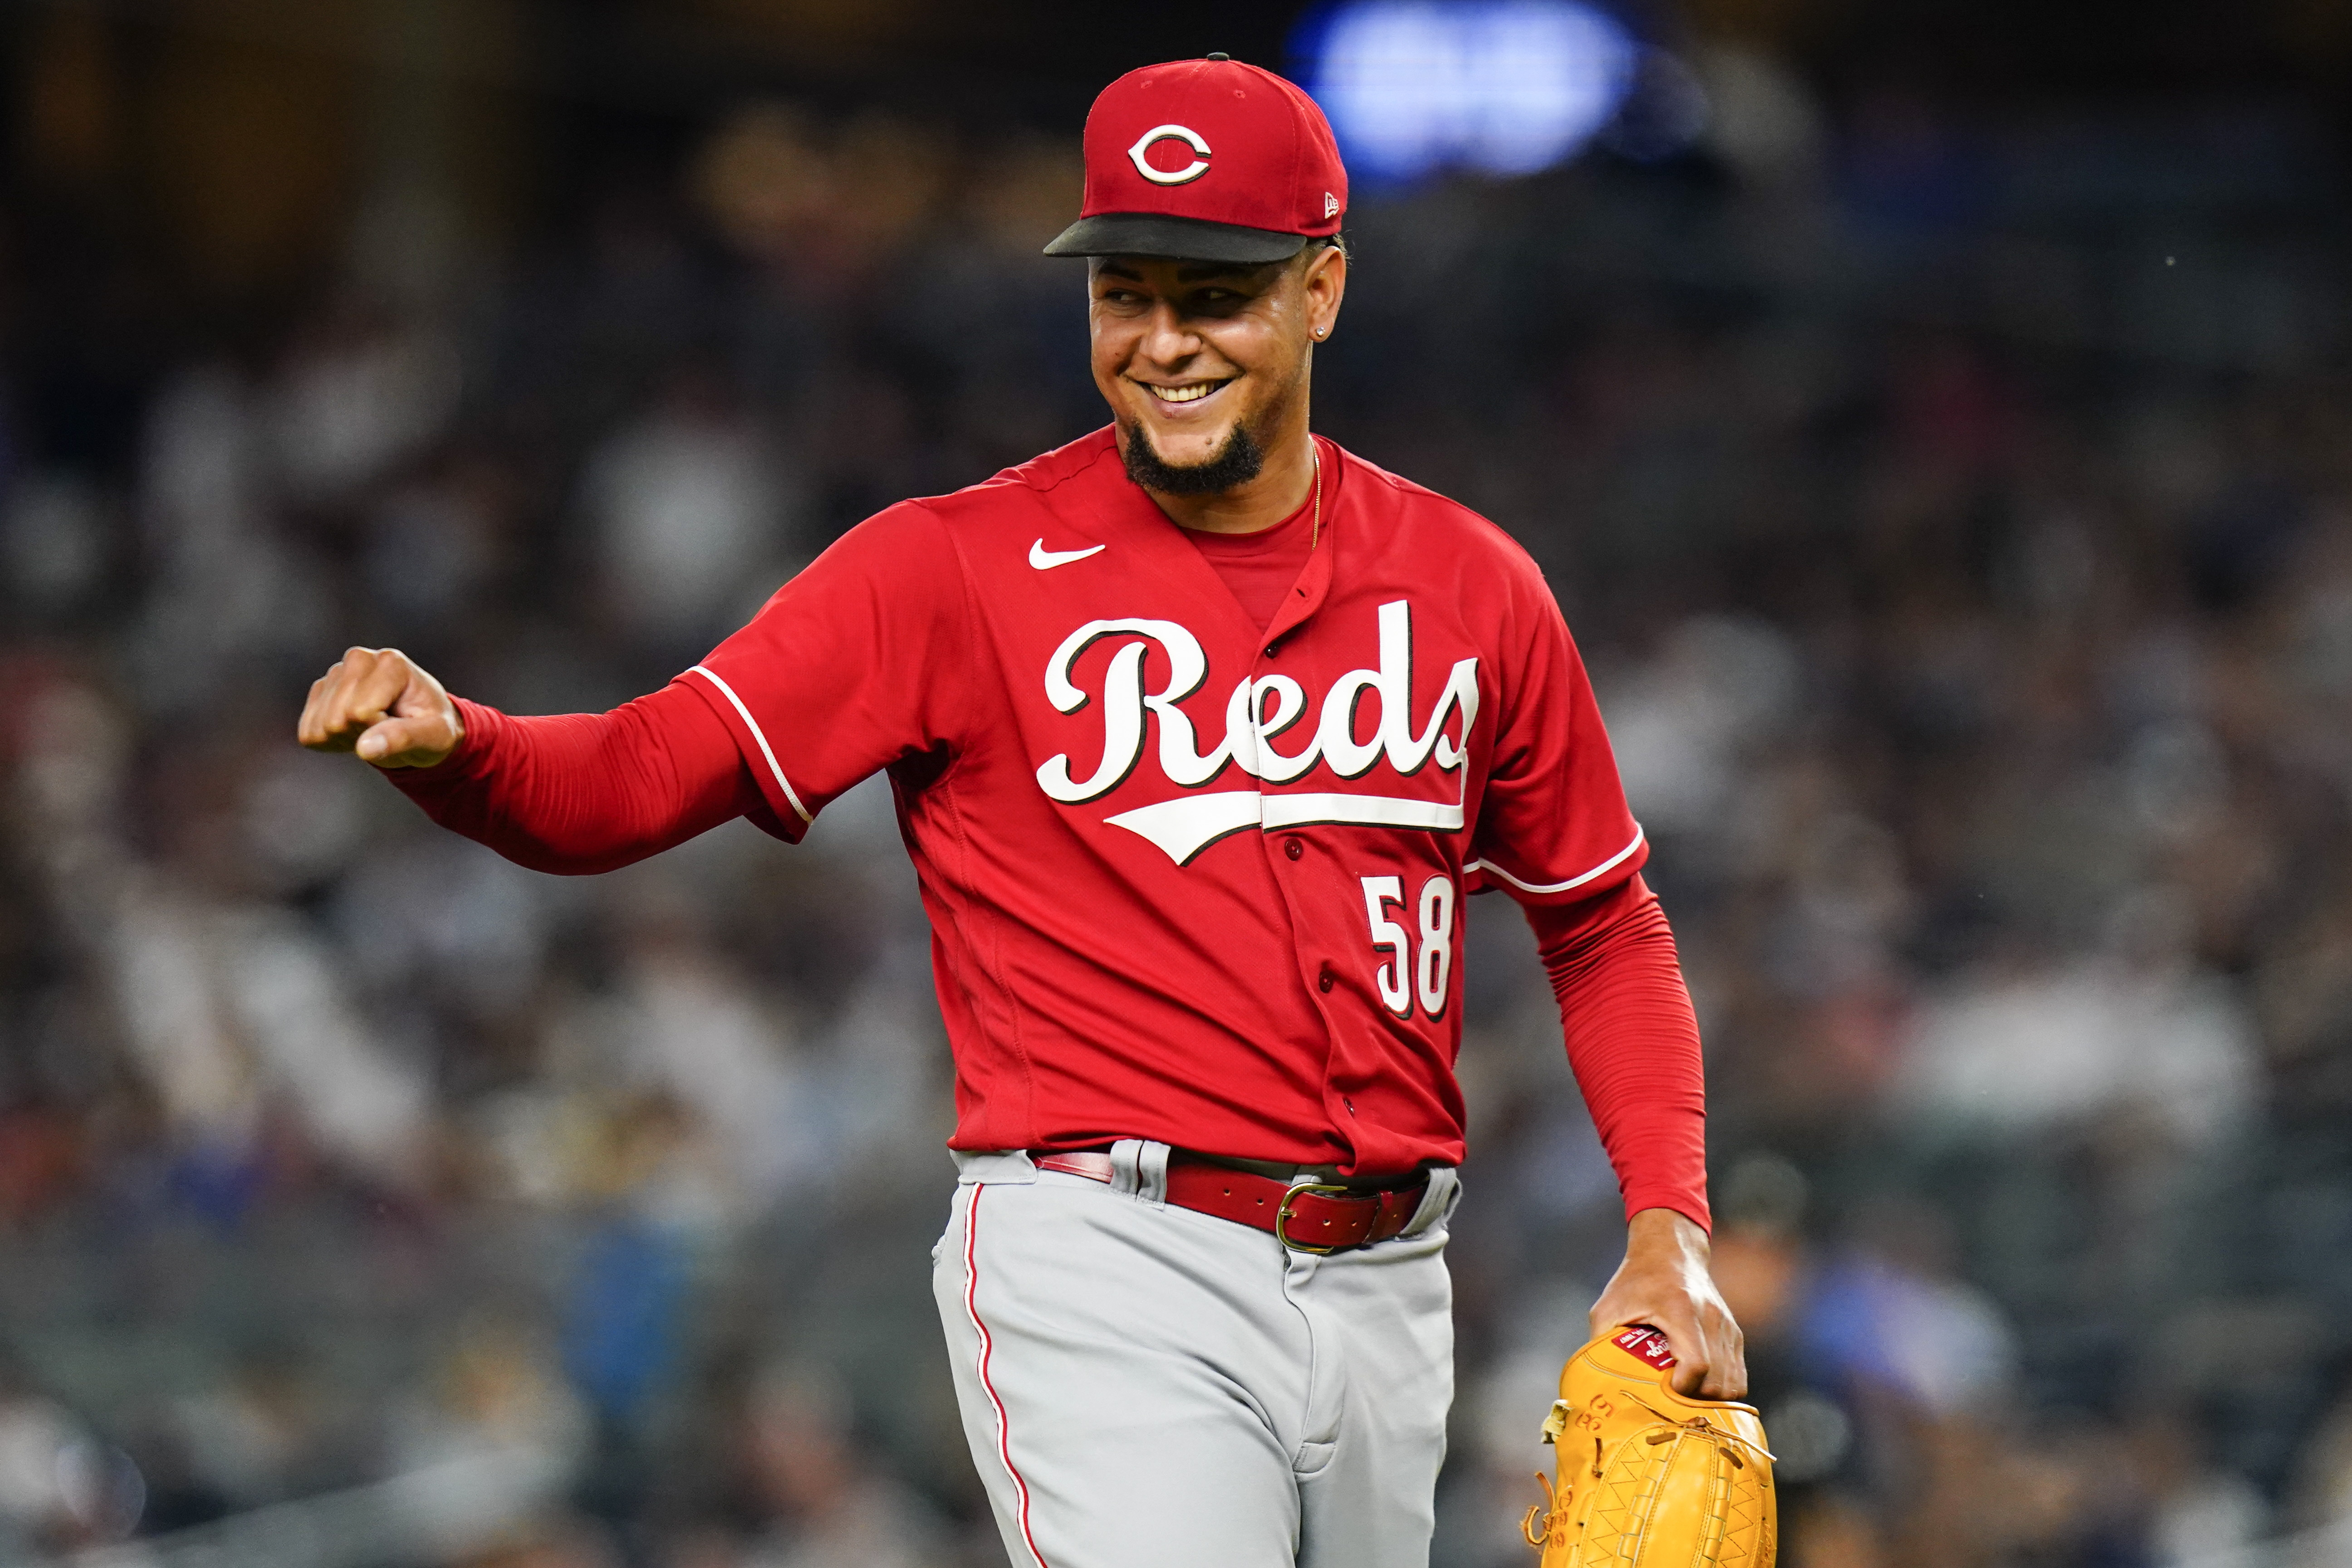 Luis Castillo Cincinnati Reds Team Issued 2022 Home Jersey MLB